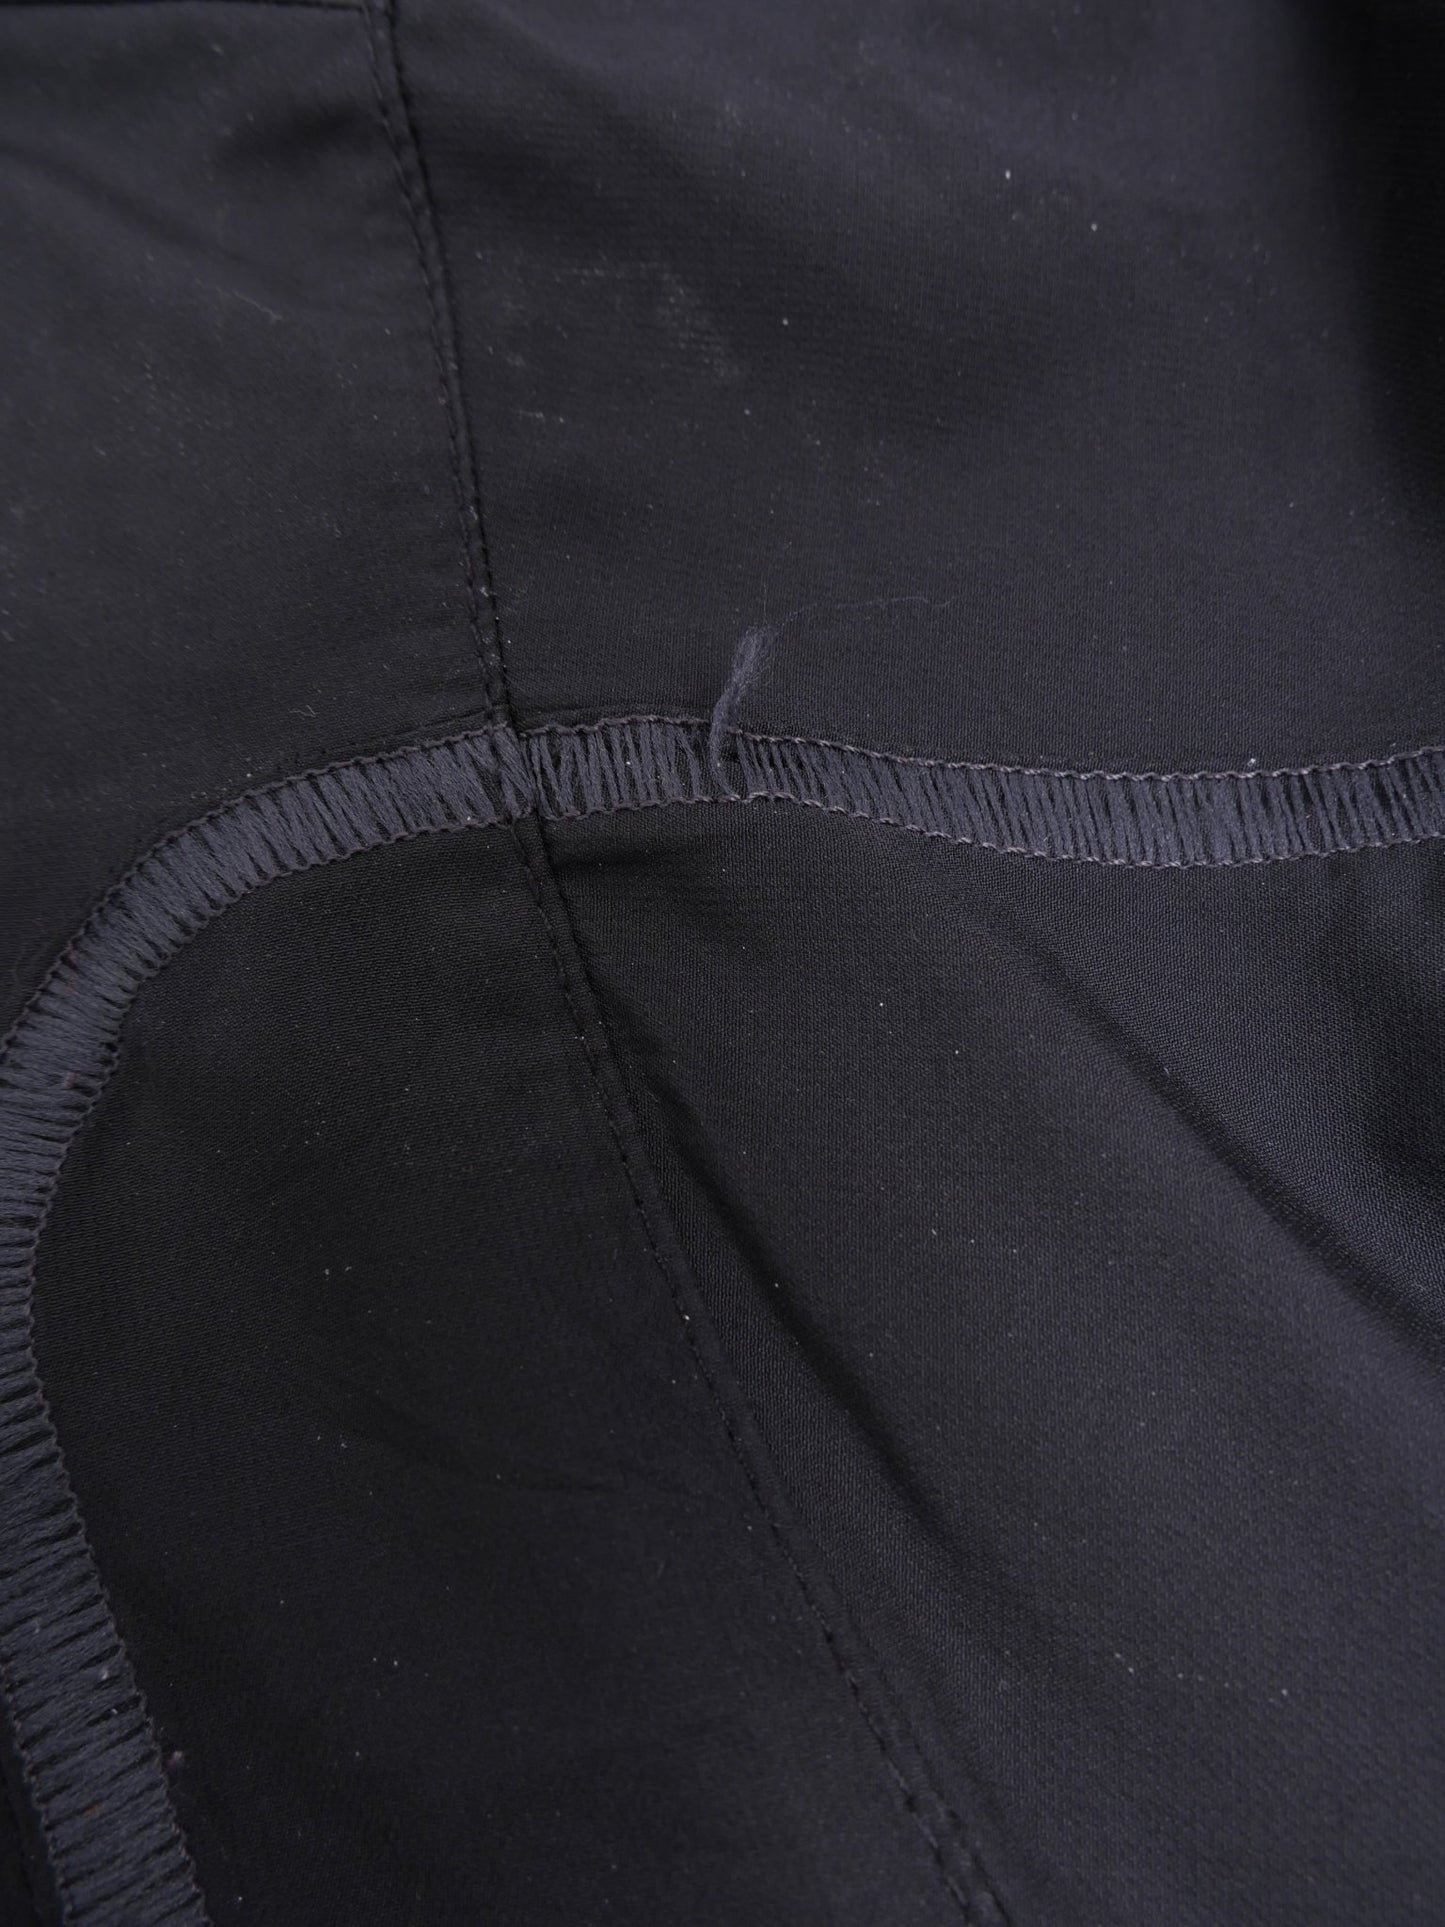 Nike Golf embroidered 'Pinnacle' Half Zip Track Jacket - Peeces